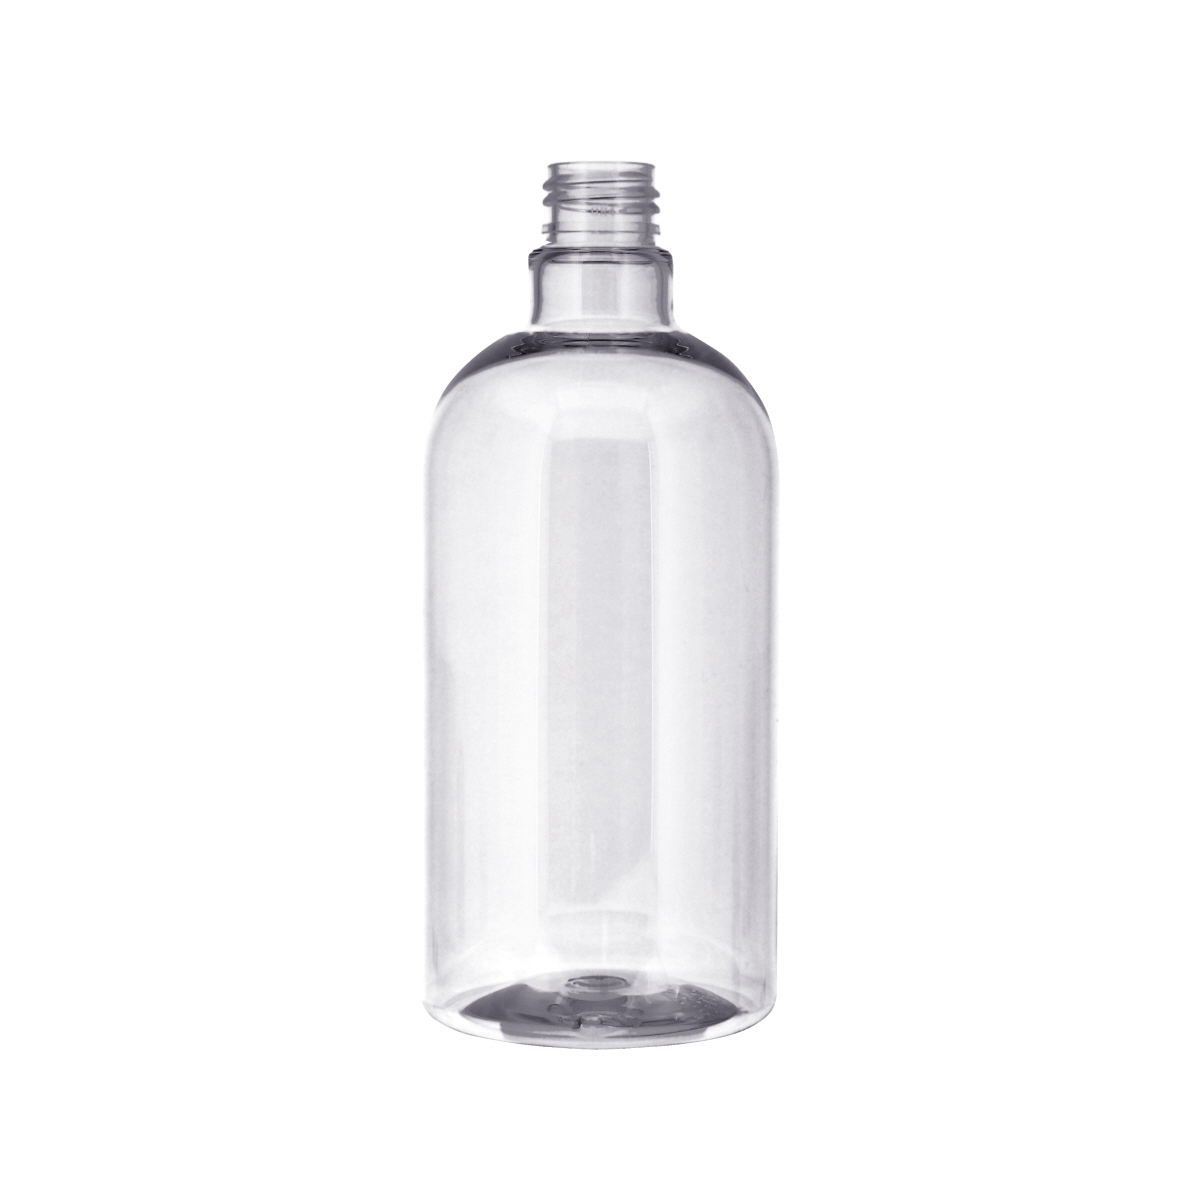 PETG瓶,251-500ml,PETG瓶,洗髮精,沐浴乳,乳液